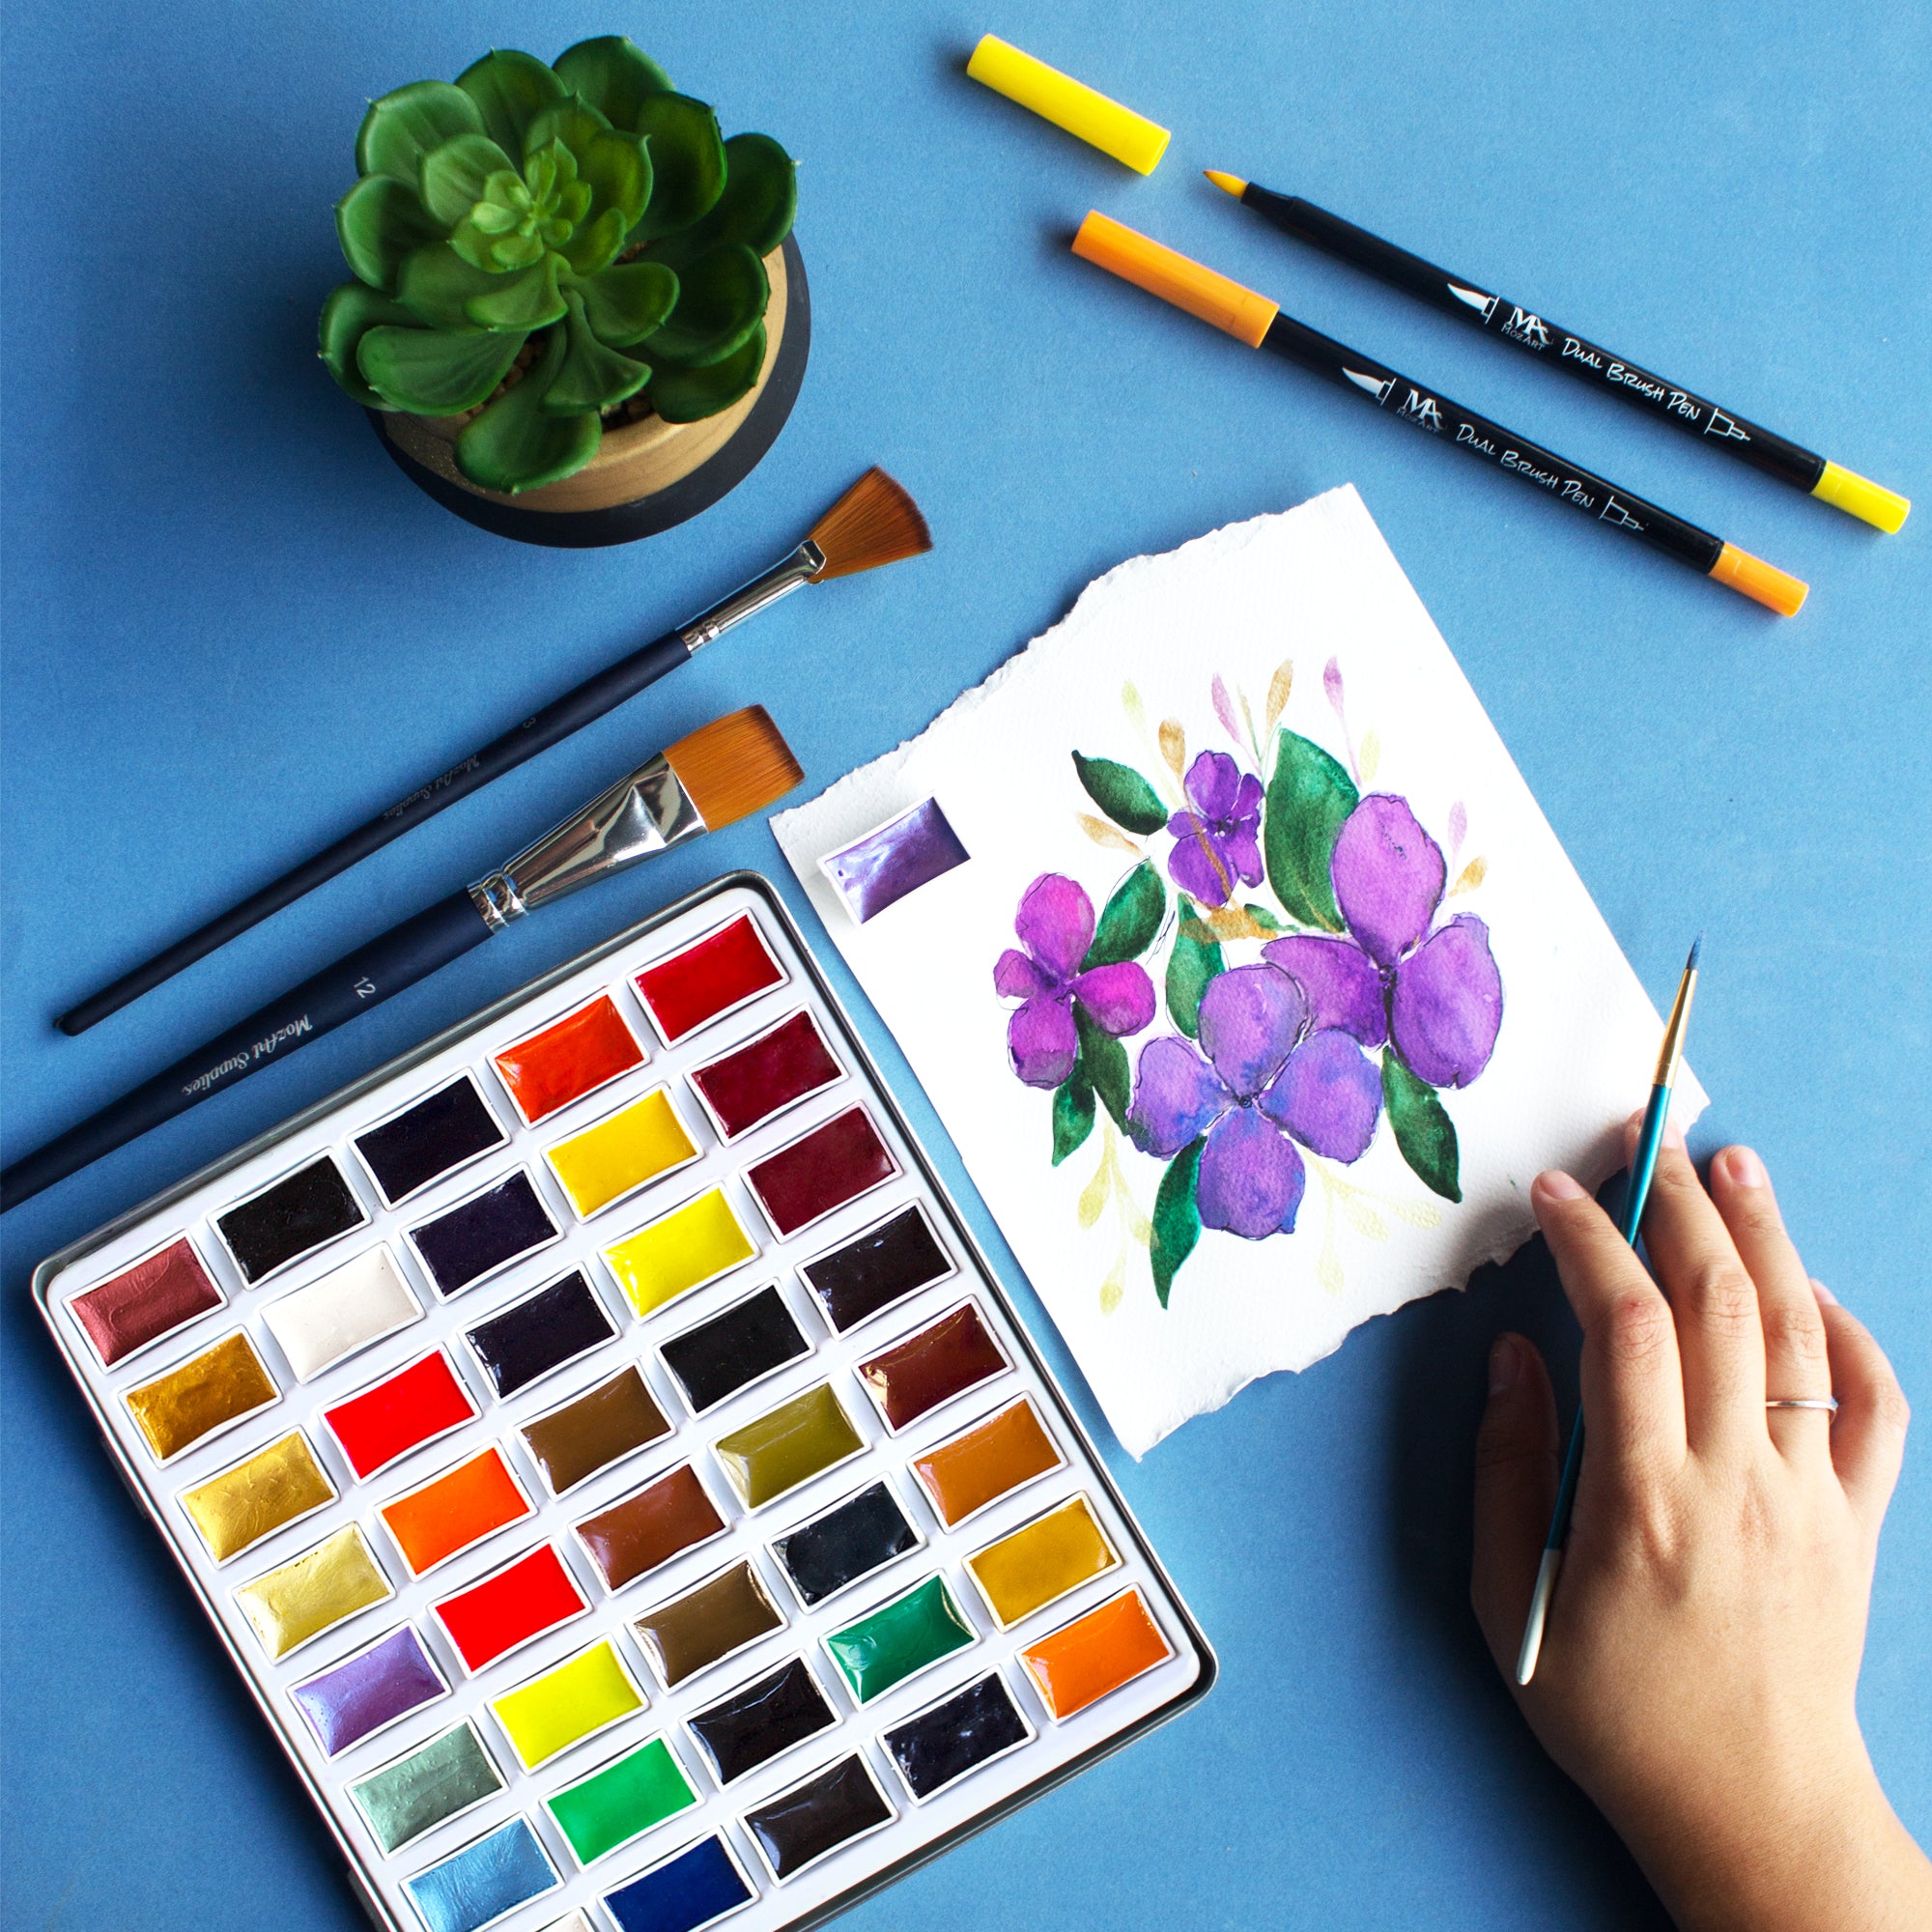 MozArt Supplies - Watercolor paint set 51 Vibrant Colors + accessories -  For beginners & professionals